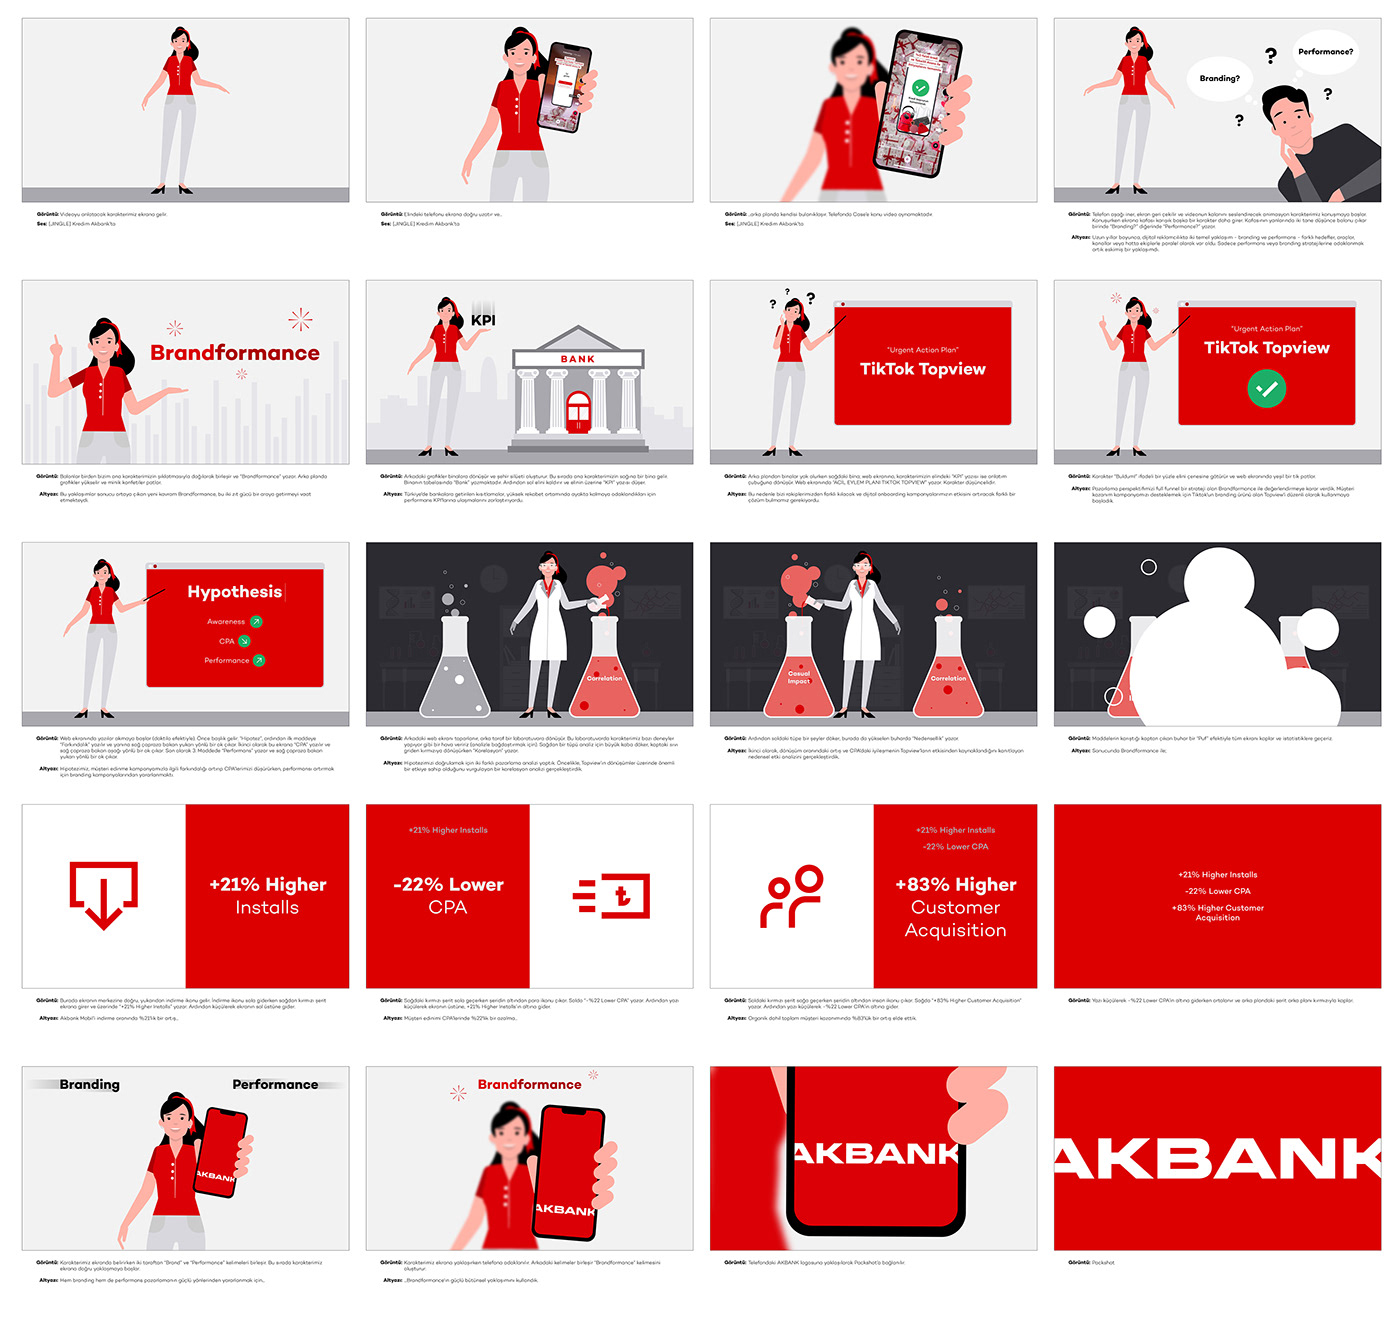 Akbank performance marketing case brandformance